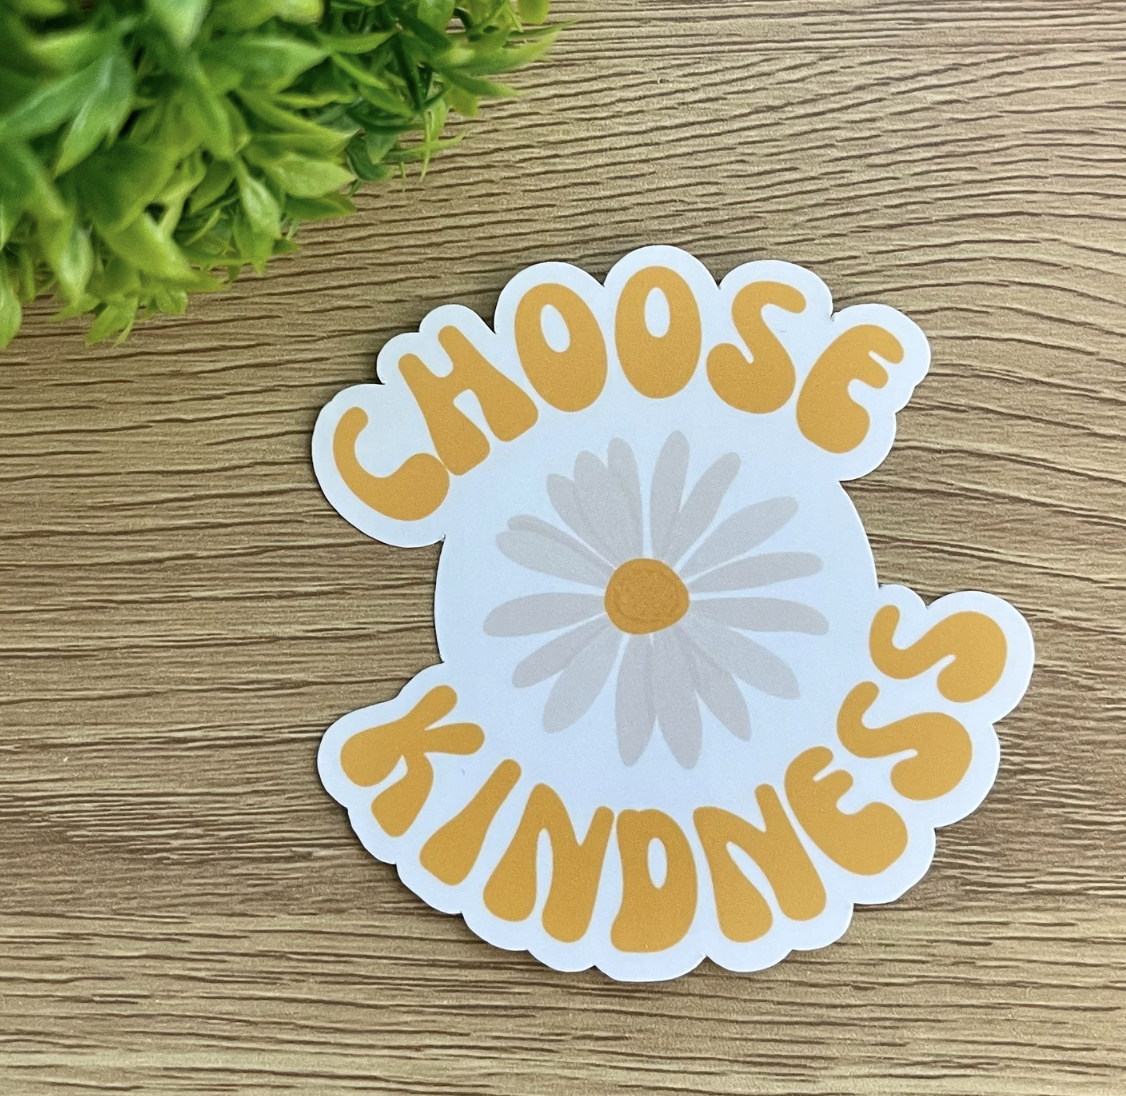 Sticker #103 | Choose Kindness Floral Sticker | Laptop & Water Bottle Sticker Decal